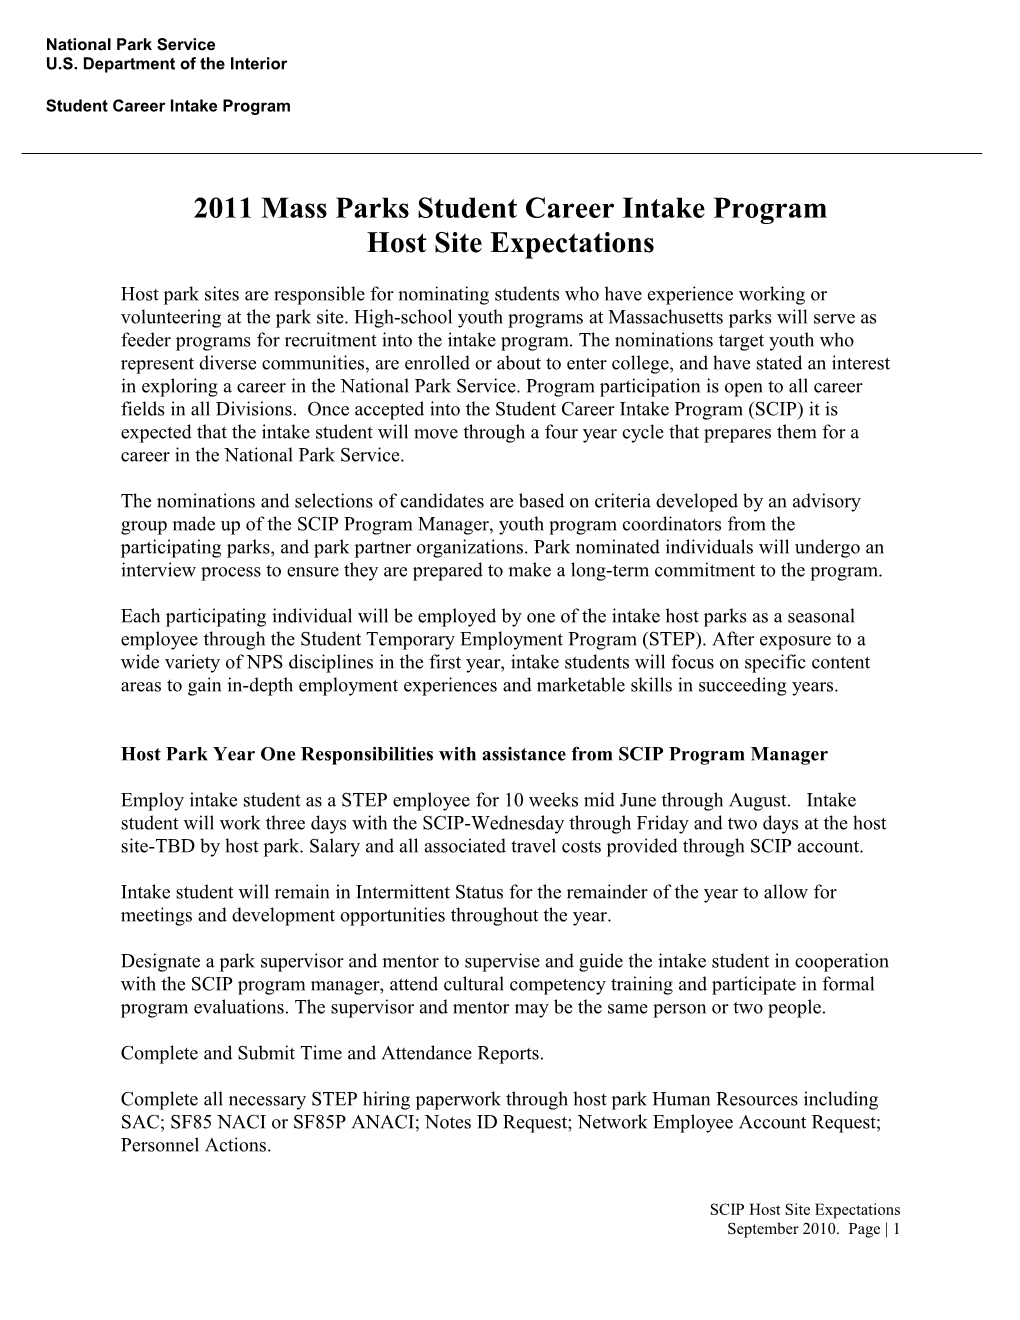 2011 Mass Parks Student Career Intake Program